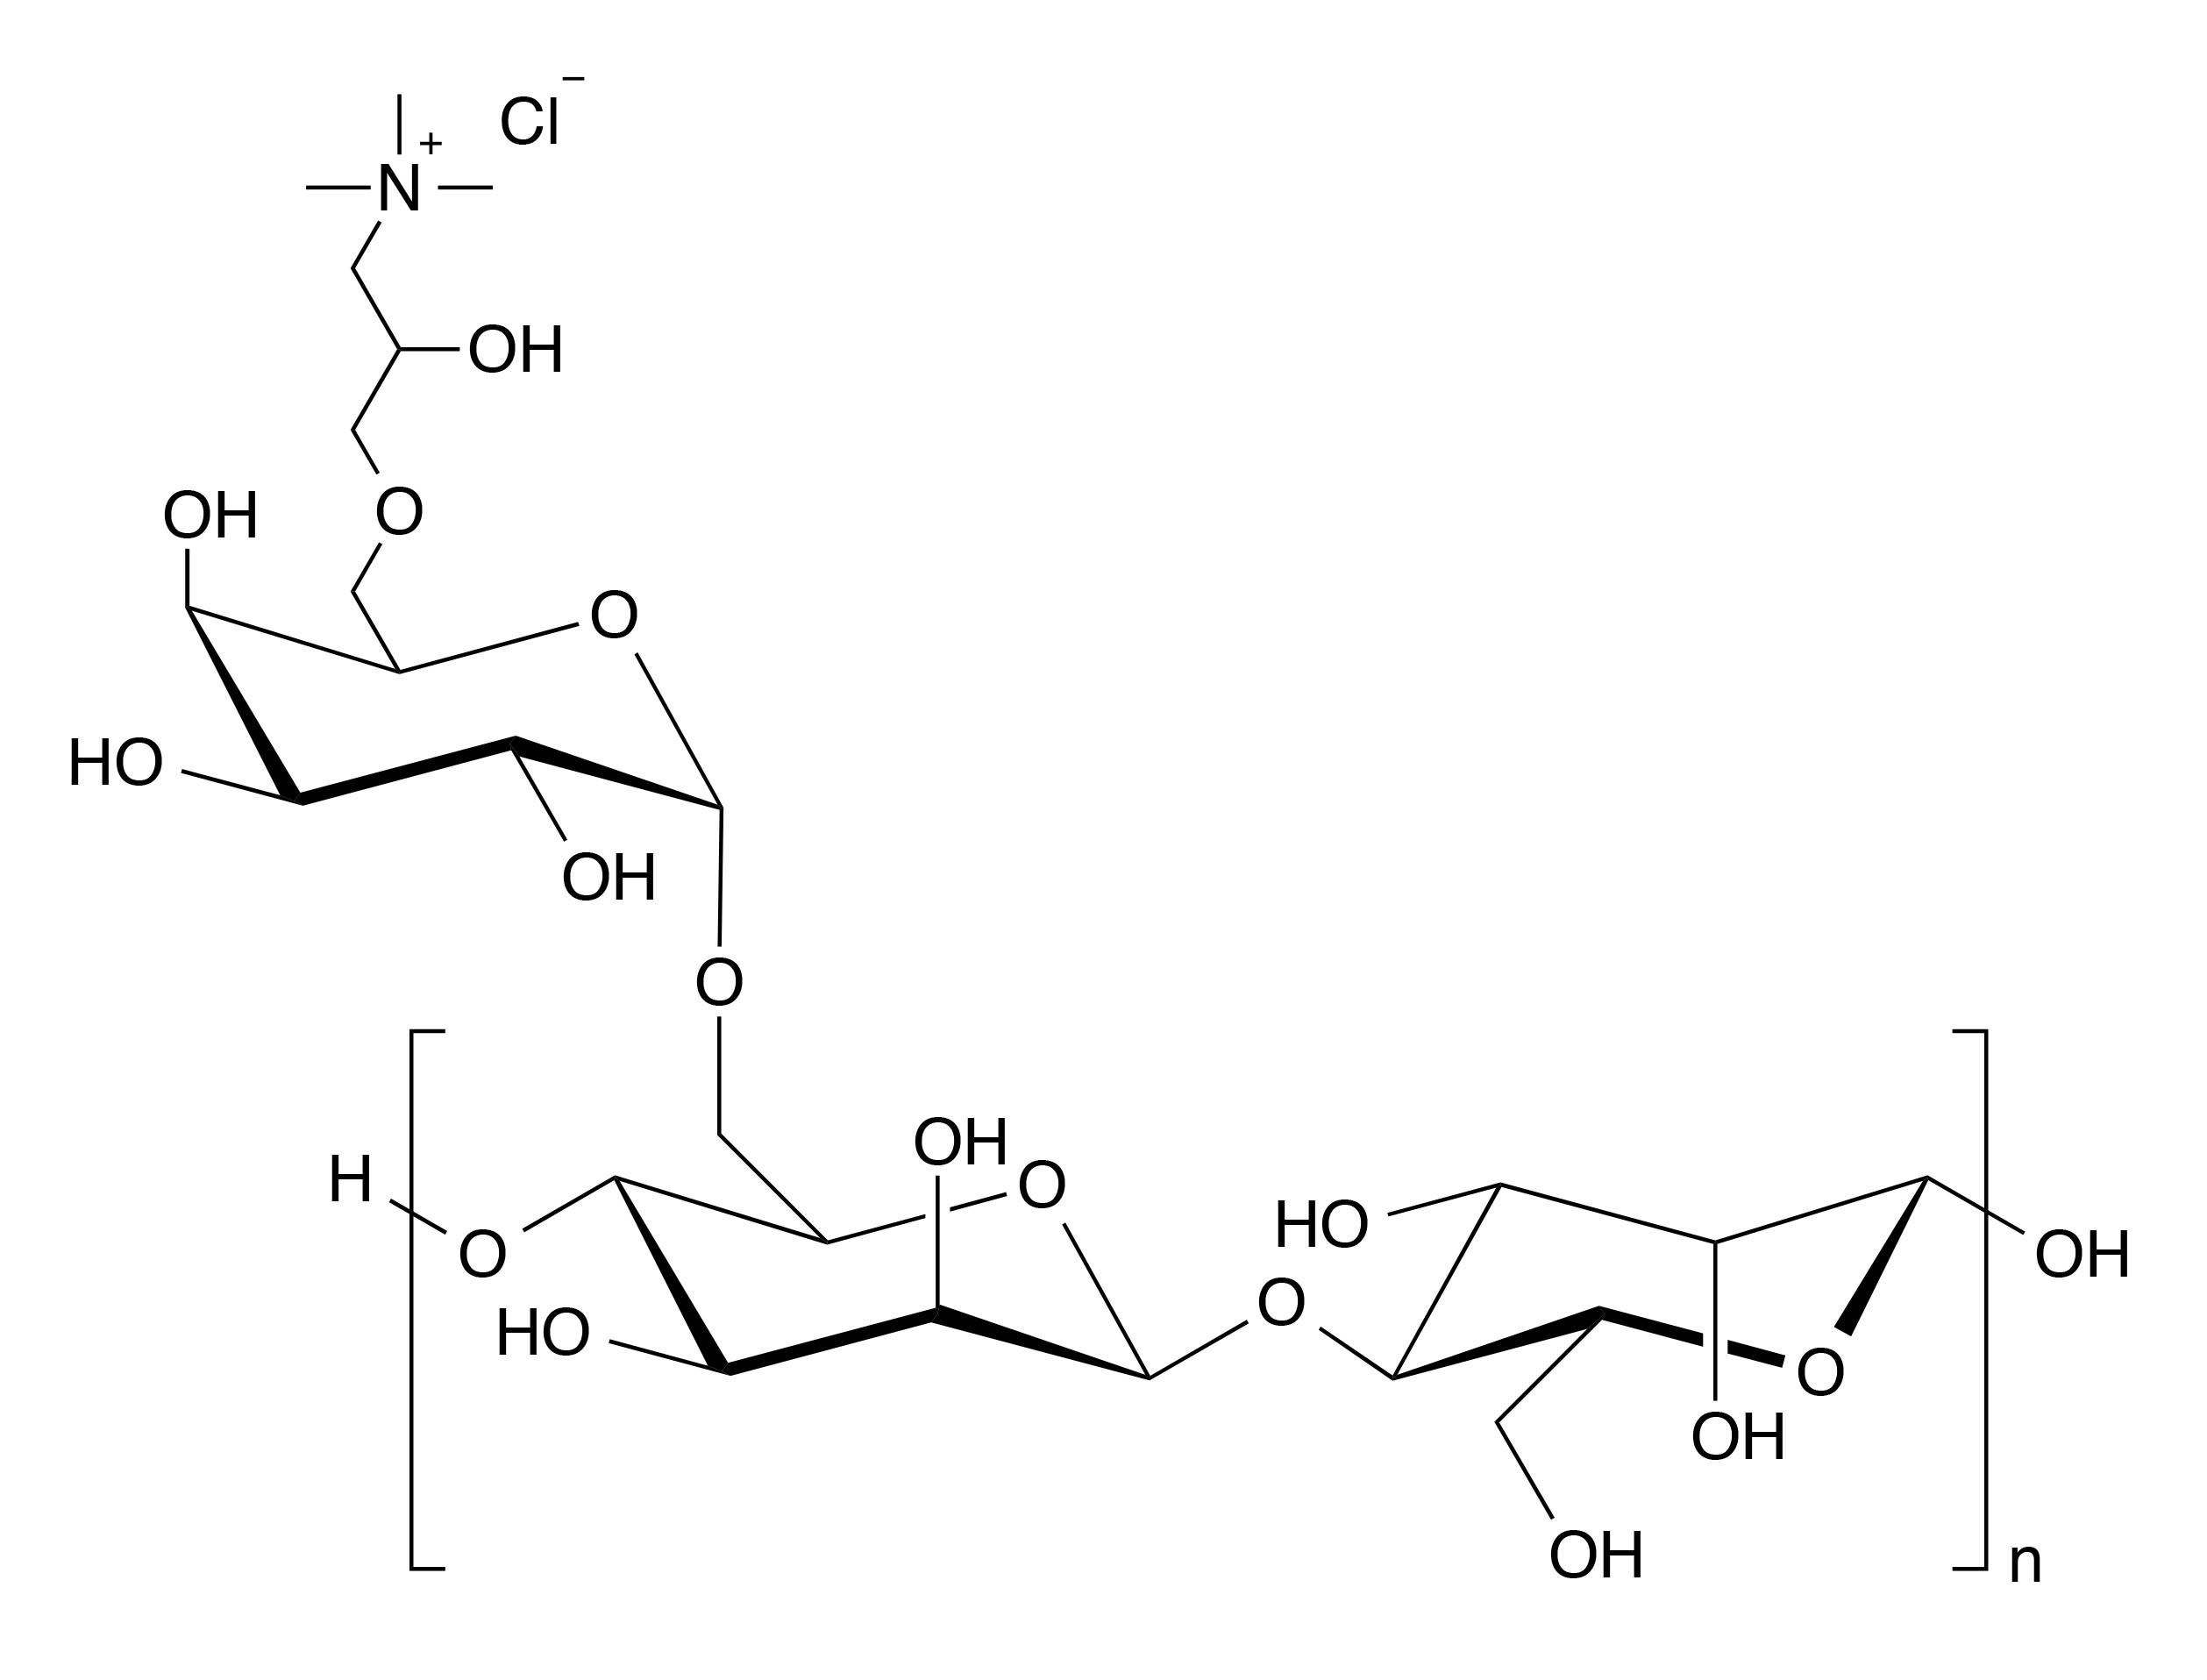 molecular structure of guar hydroxypropyltrimonium chloride